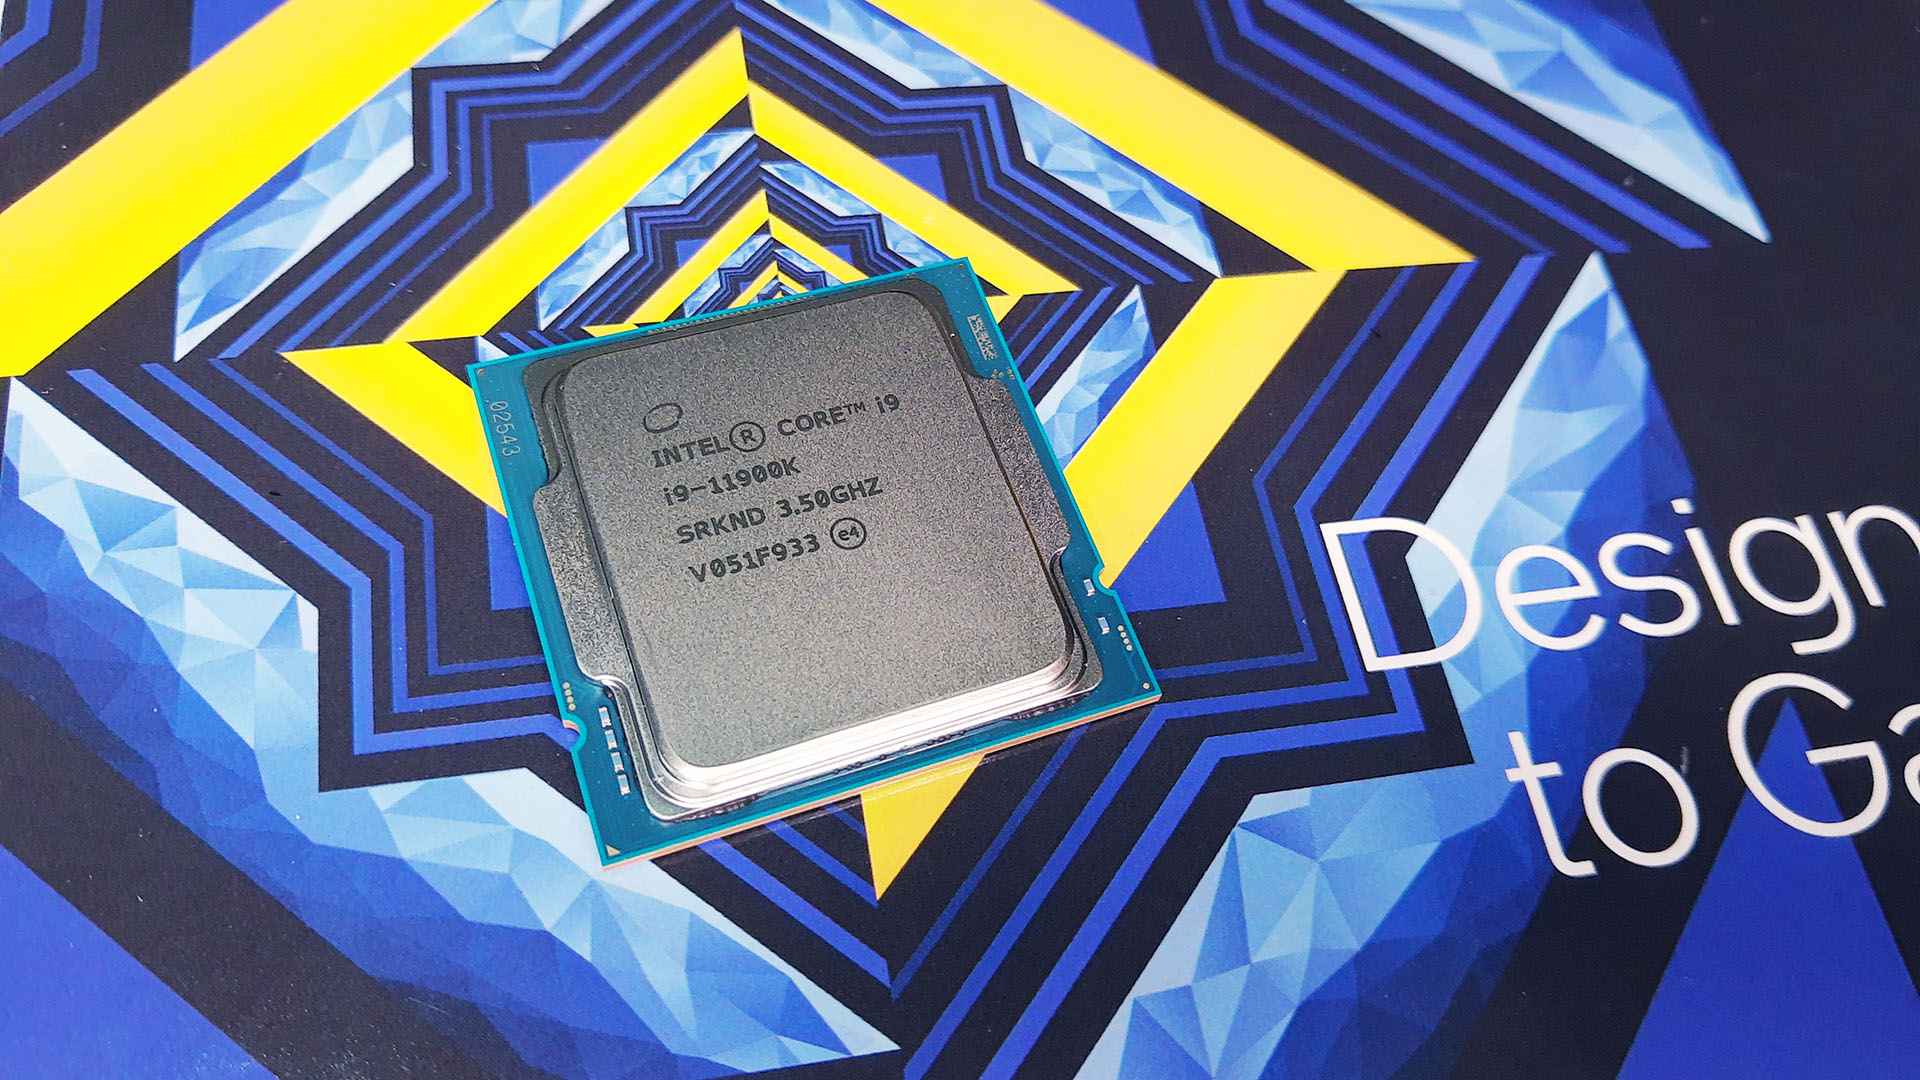 Intel Core i9-11900K Review